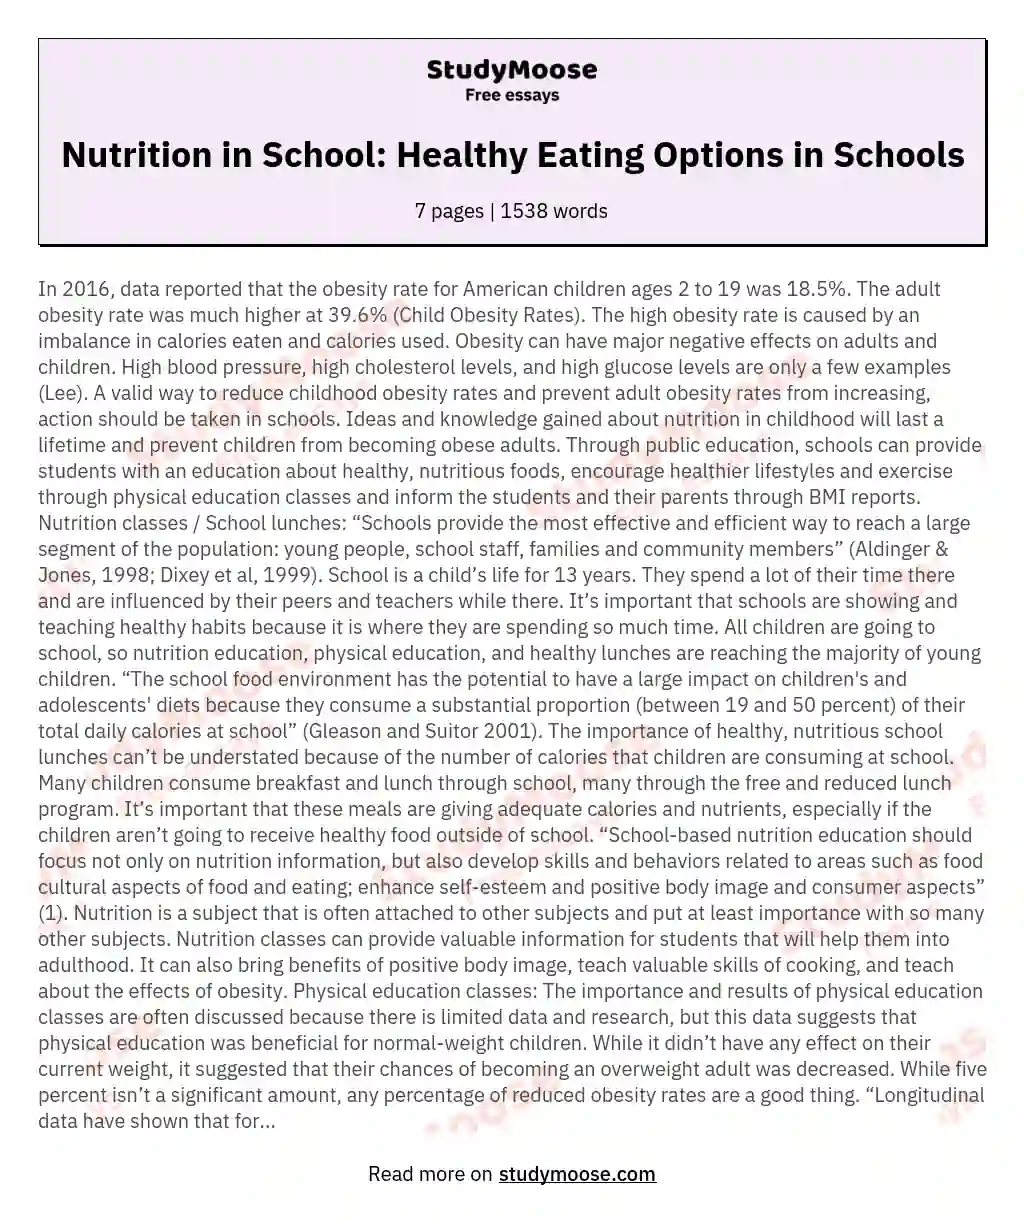 Nutrition in School: Healthy Eating Options in Schools essay